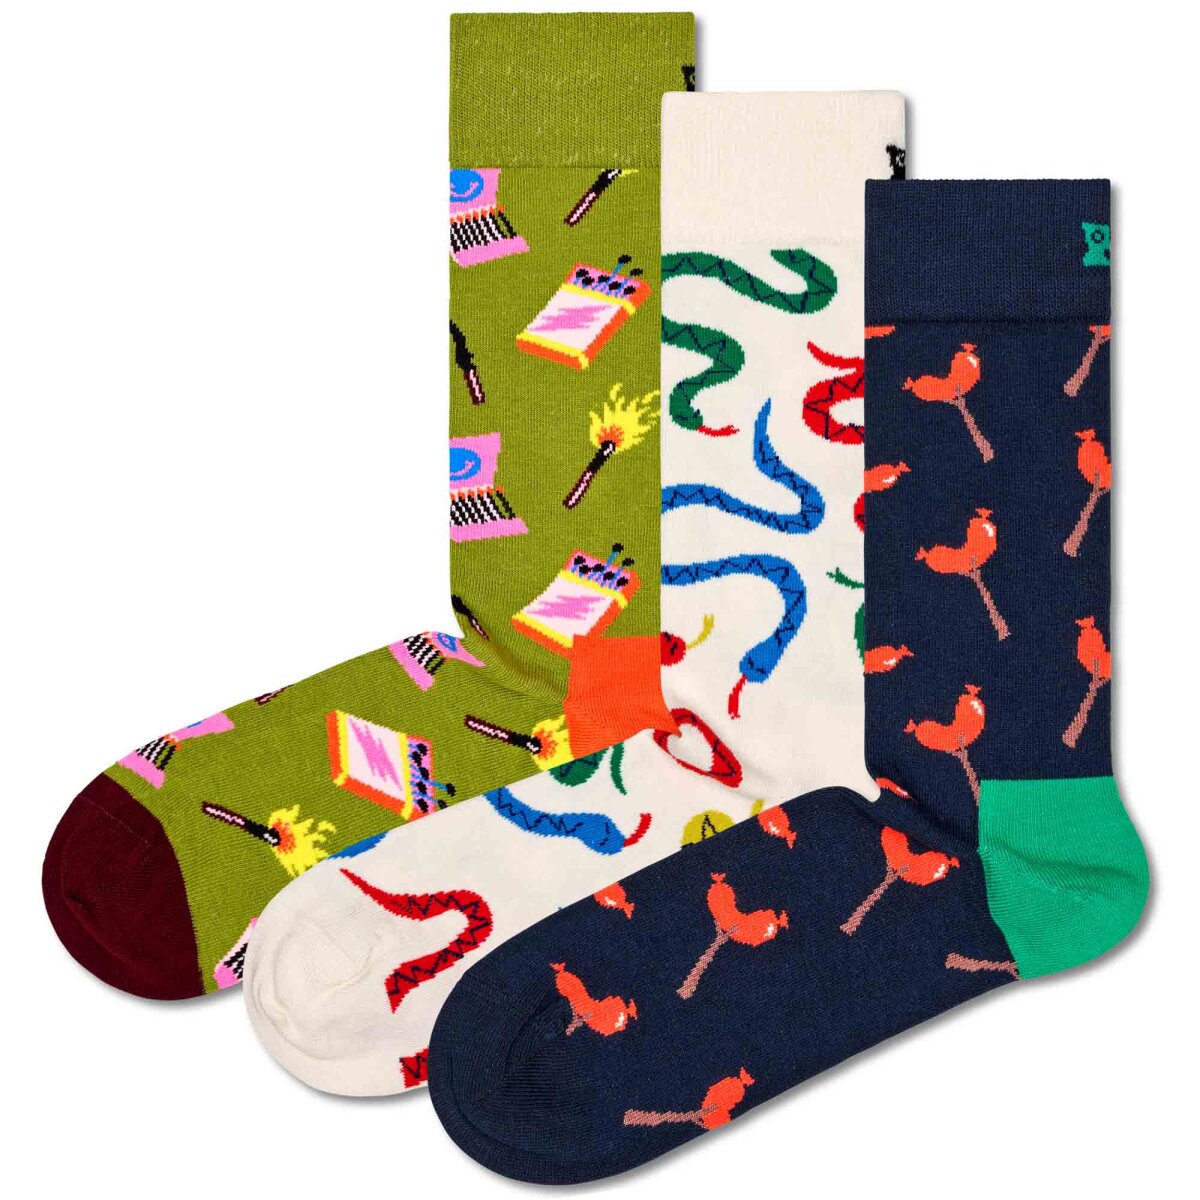 Socks 39,95 3er Happy Geschenkbox, € Special Socken, Farb-Mix, - Unisex Pack